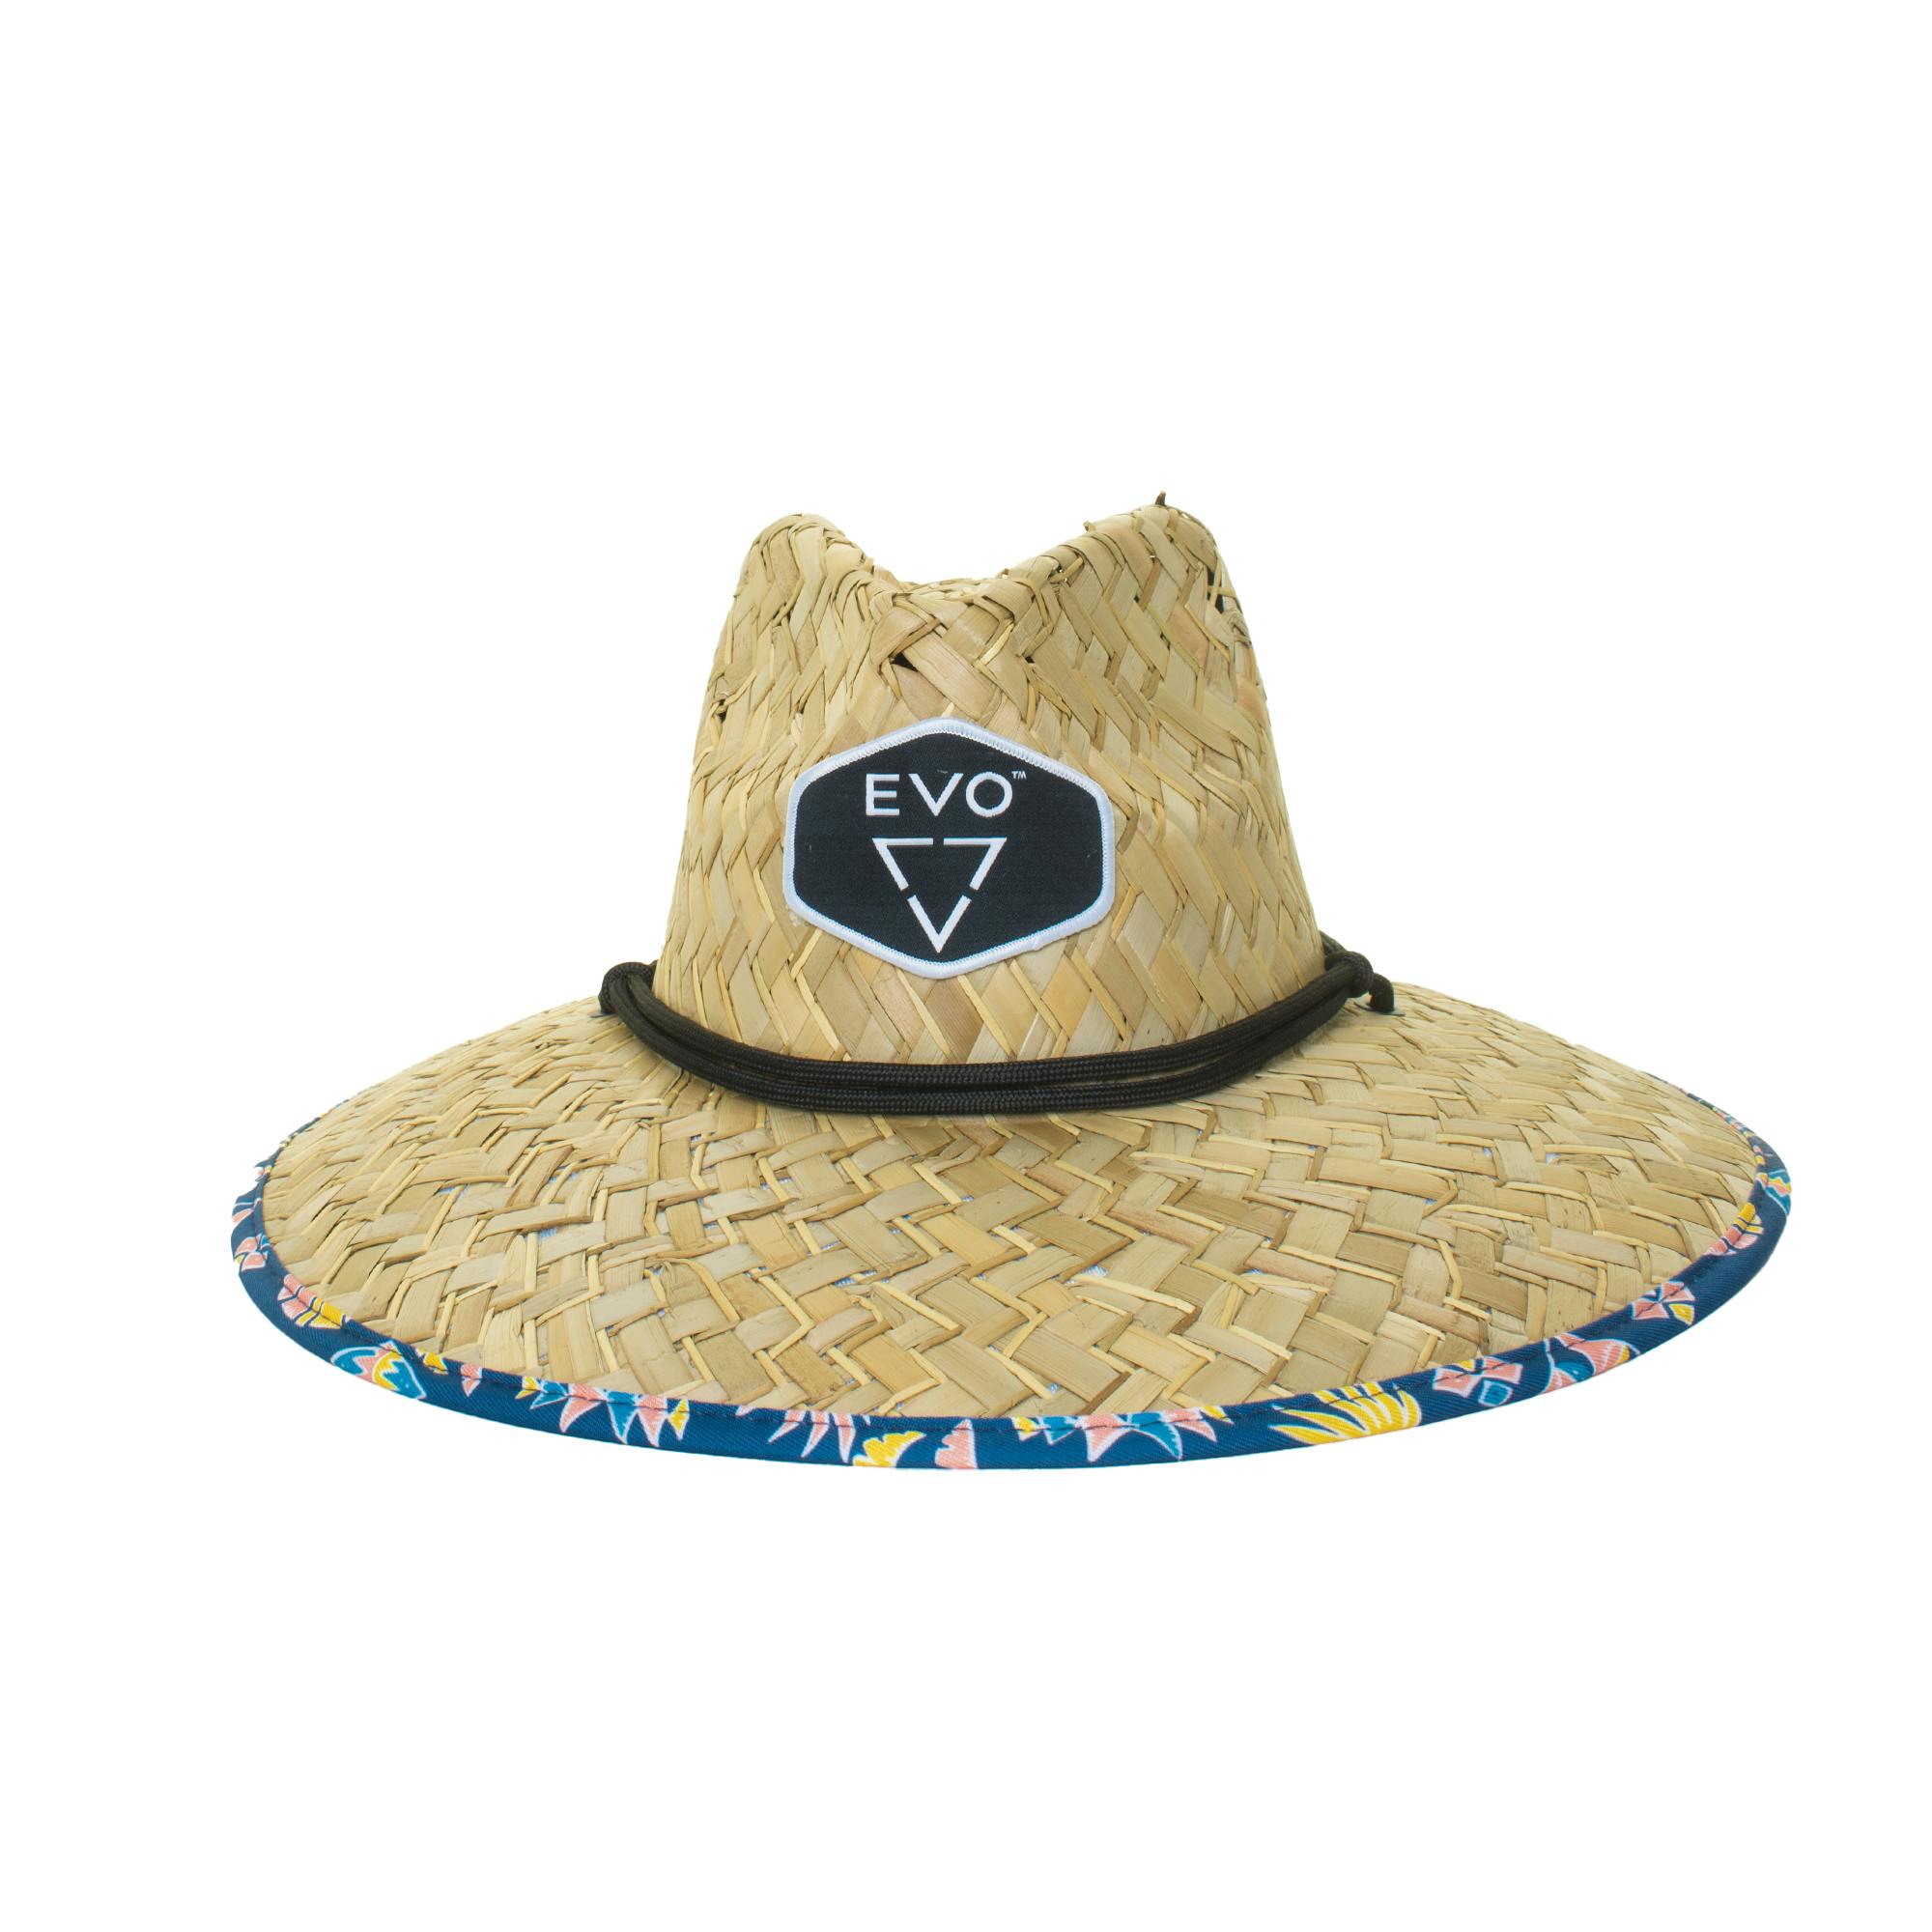 EVO Straw Lifeguard Hat - Mingo (Men's) Front View